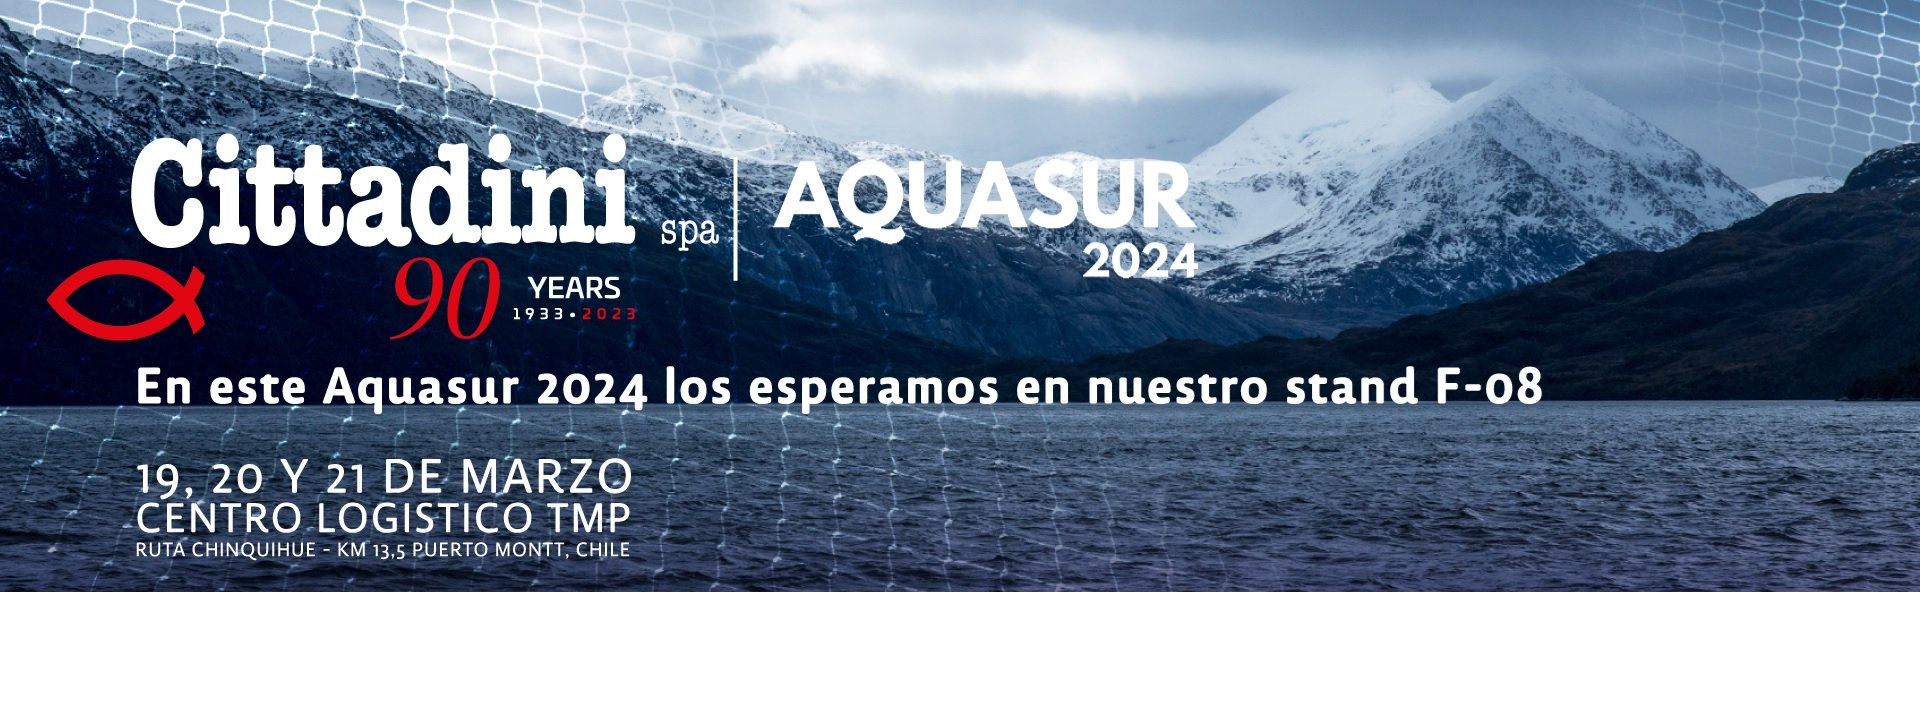 Aquasur 2024 - Cittadini spa